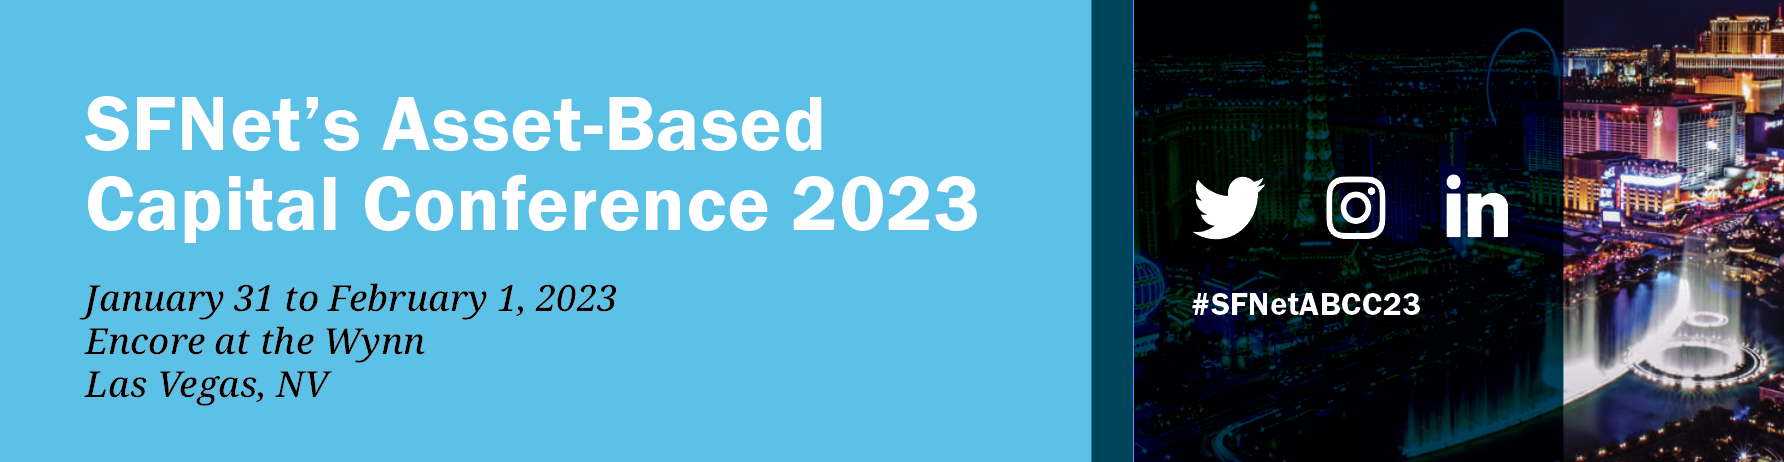 SFNet's Asset-Based Capital Conference 2023 logo